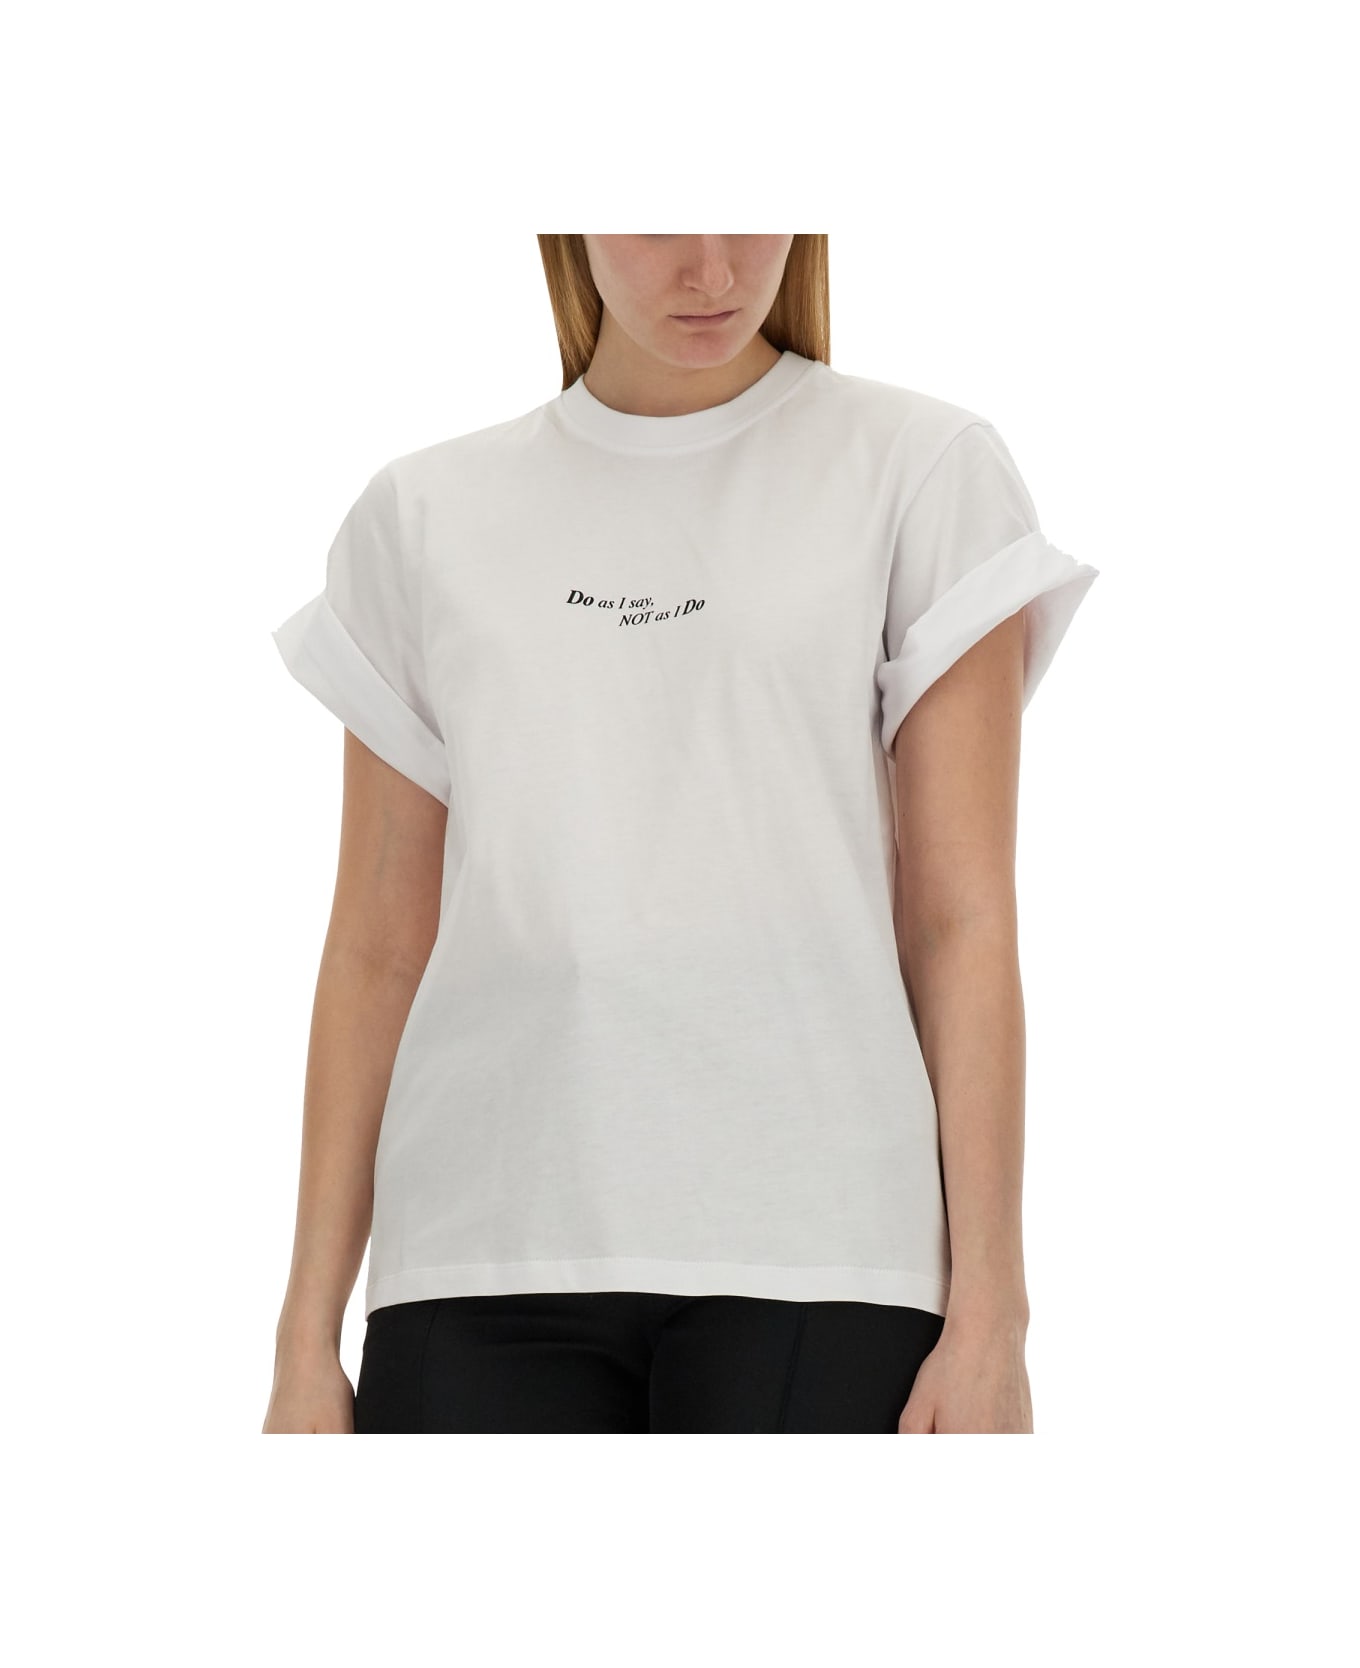 Victoria Beckham Cotton T-shirt - WHITE